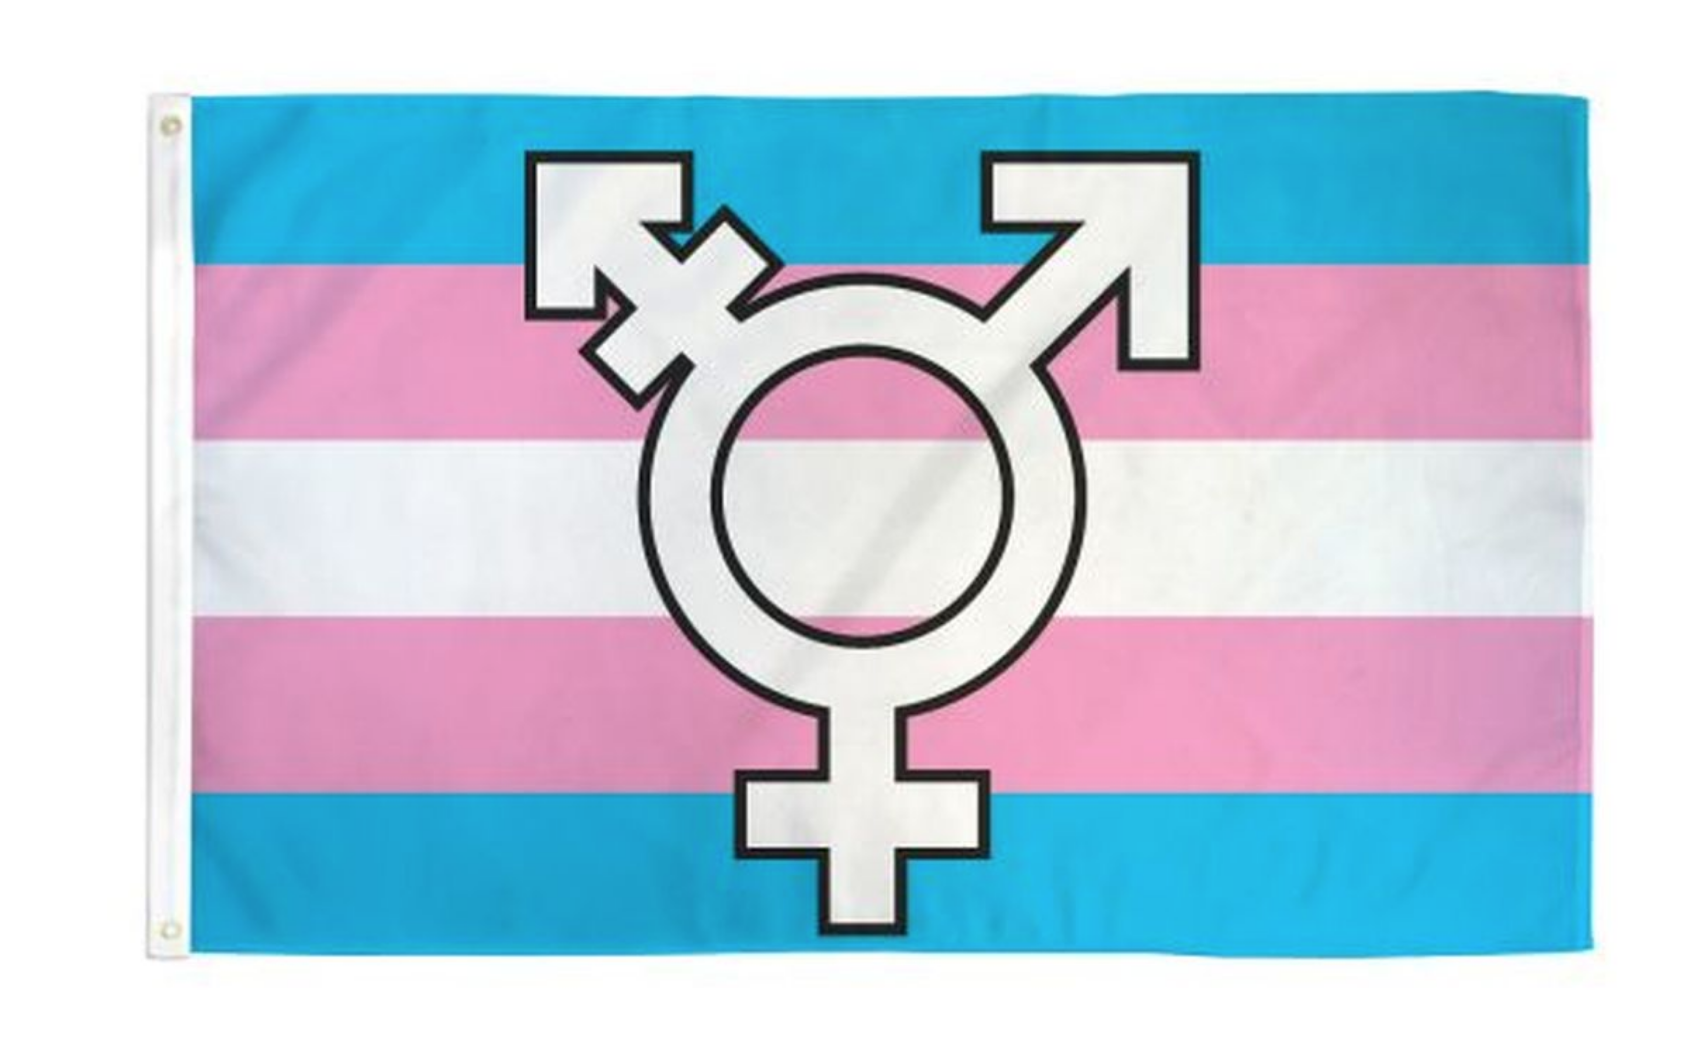 In Svezia esplodono i casi di minori transgender e ora si indaga sulle cause 1